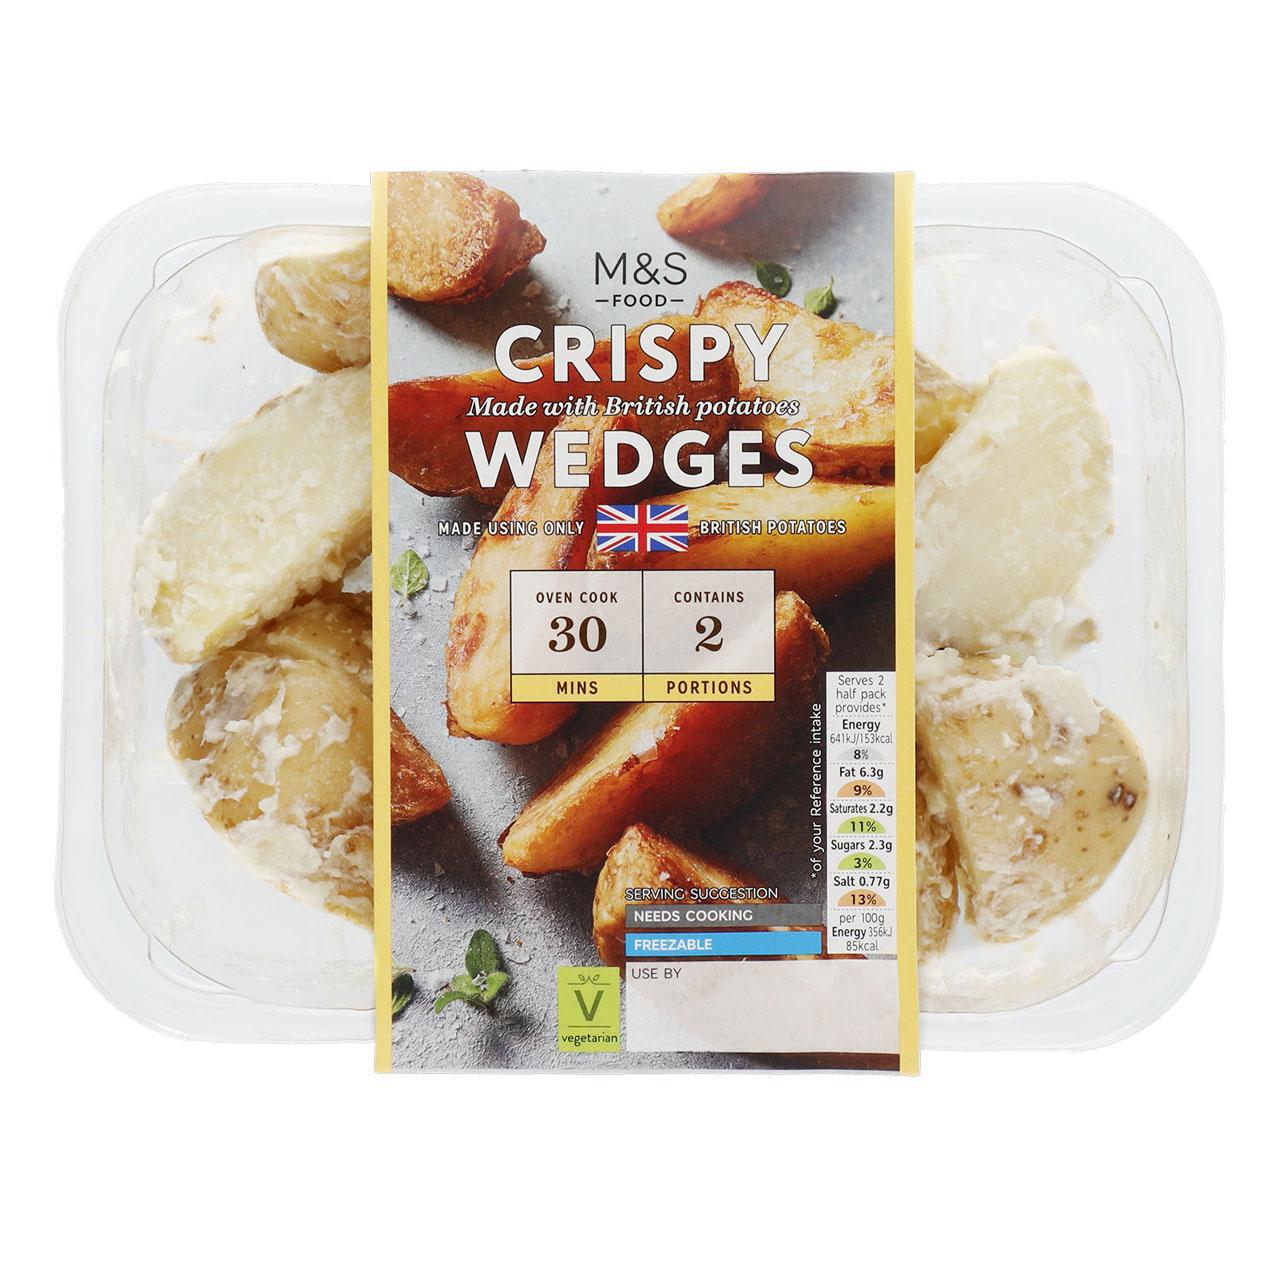 M&S Crispy Potato Wedges 360g